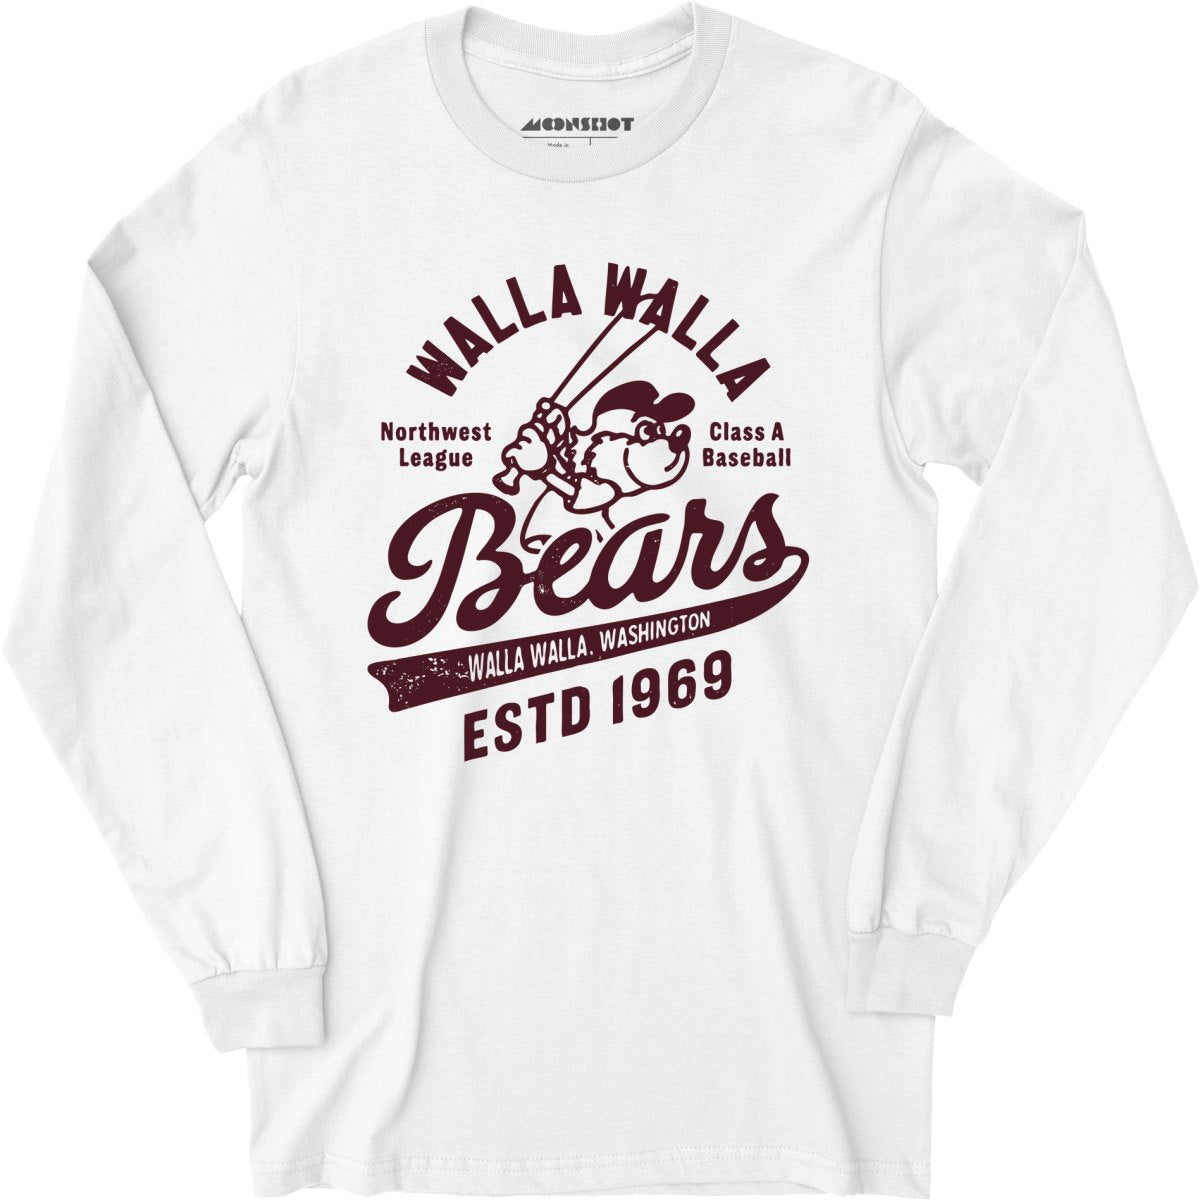 Walla Walla Bears - Washington - Vintage Defunct Baseball Teams - Long Sleeve T-Shirt